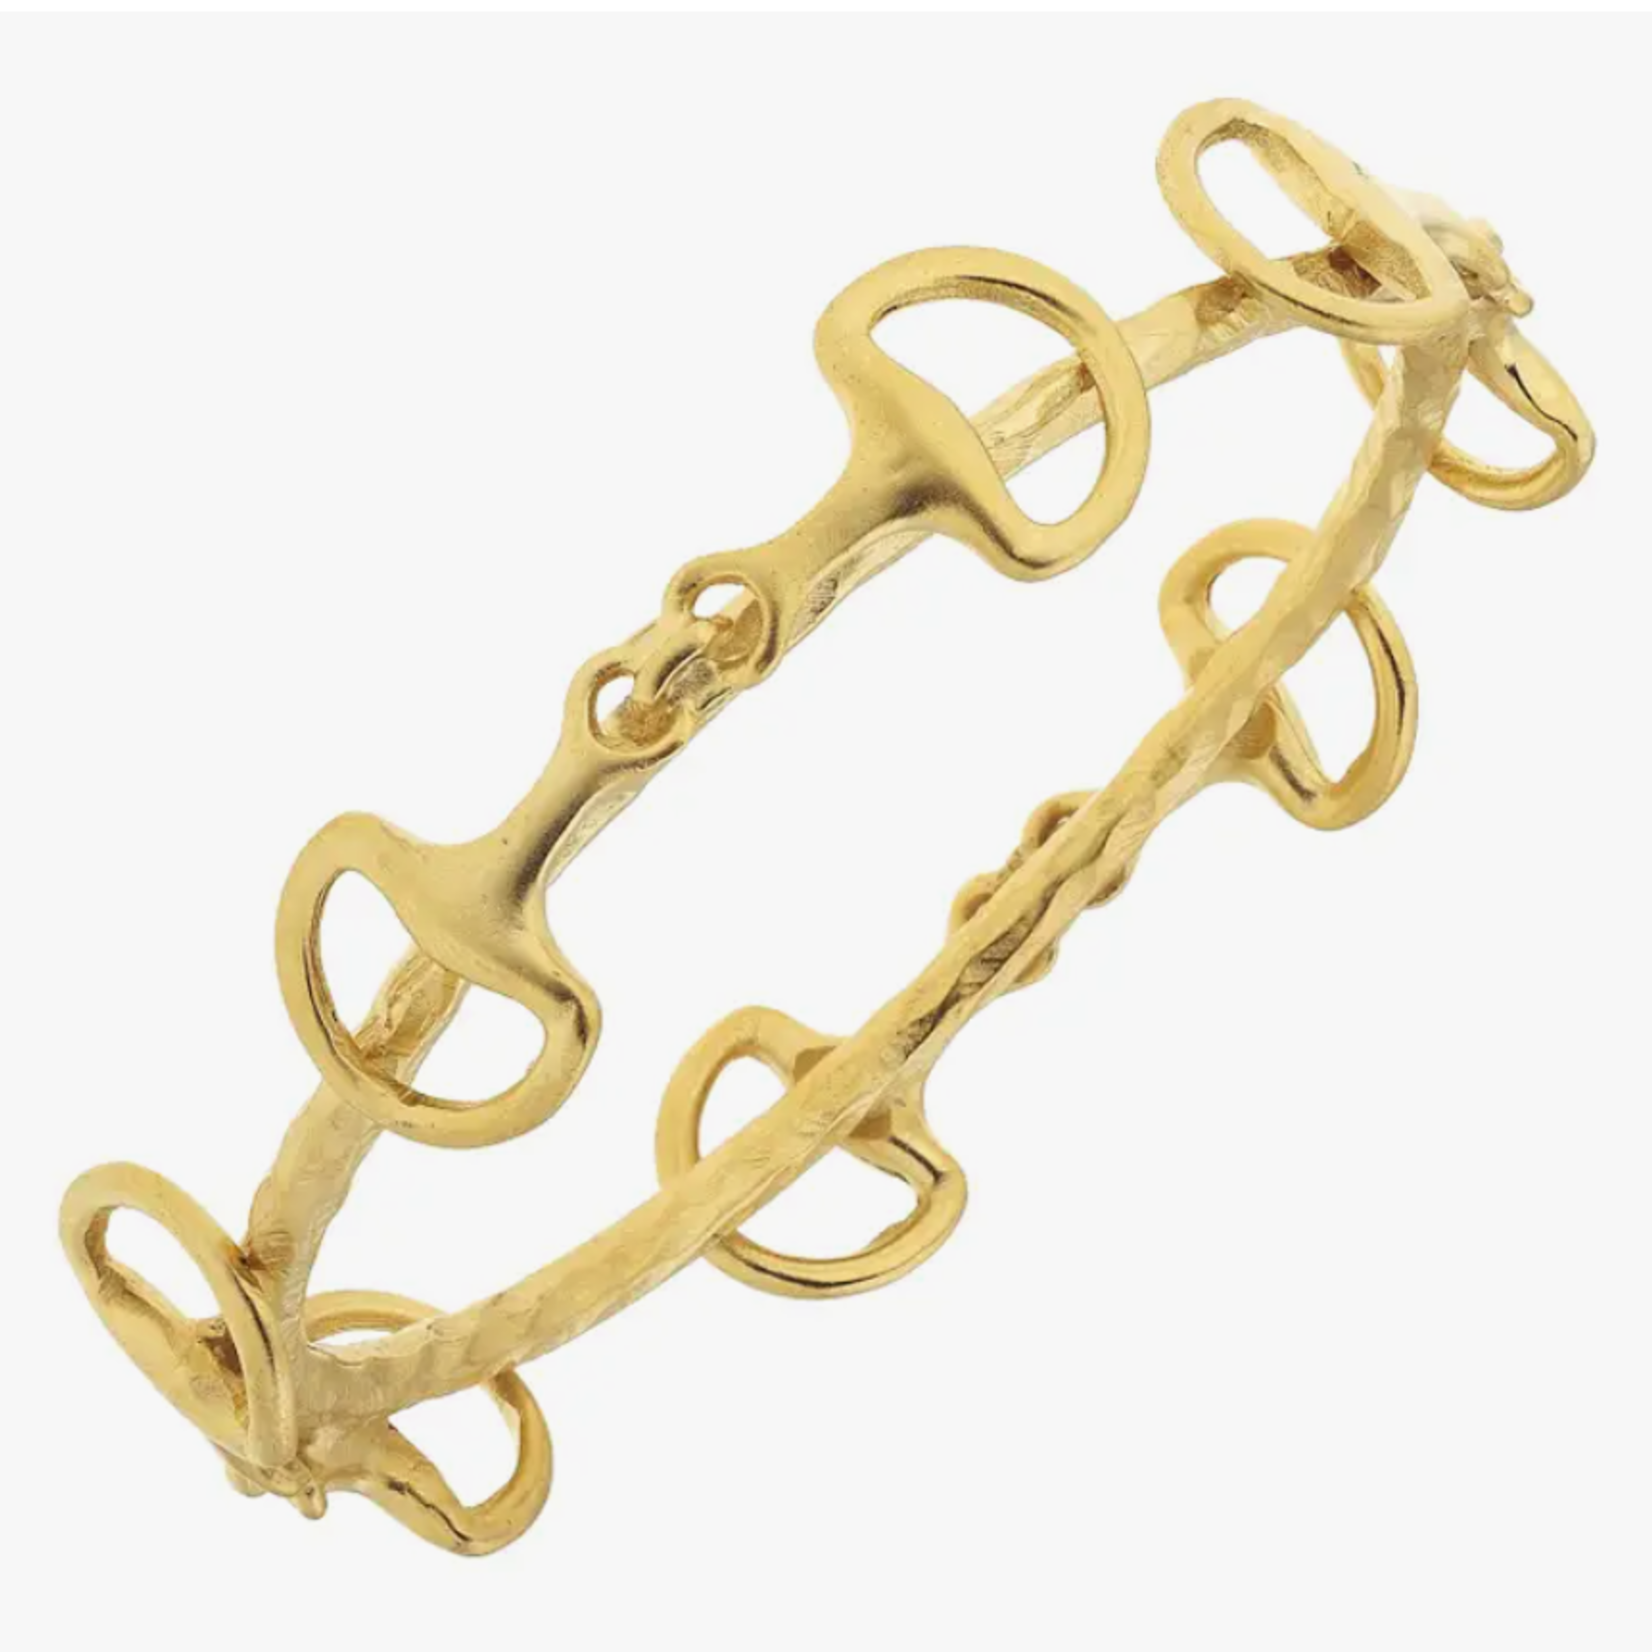 susan shaw Gold Horsebit Bangle Bracelet